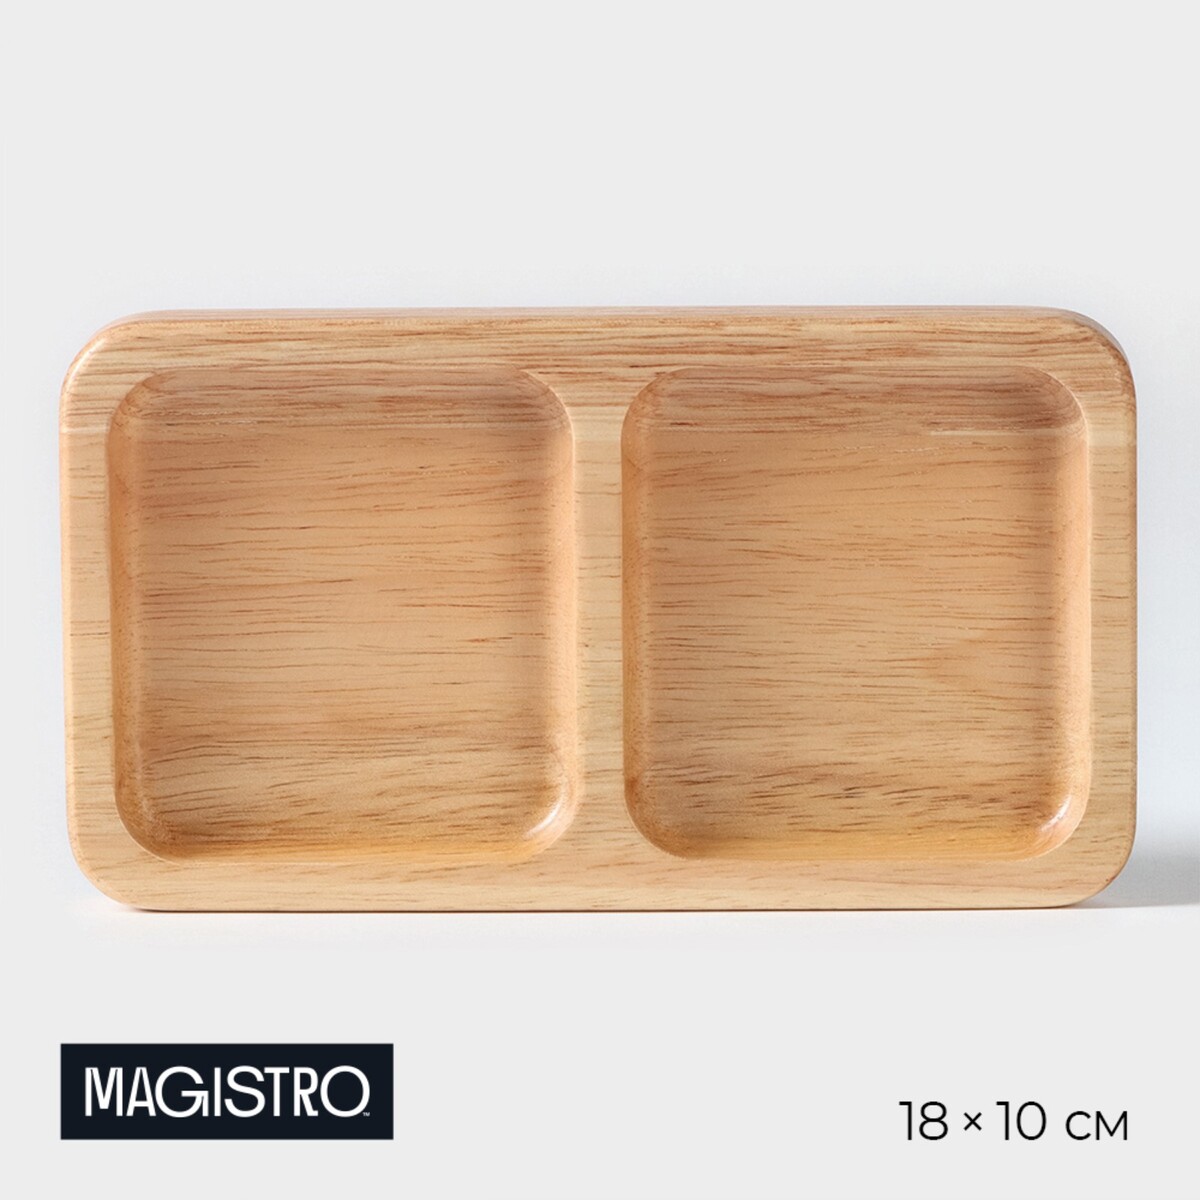 Менажница magistro tropical, 2 секции, 18×10×1,8 см, каучуковое дерево менажница magistro forest dream 3 секции 40×10 см акация мрамор